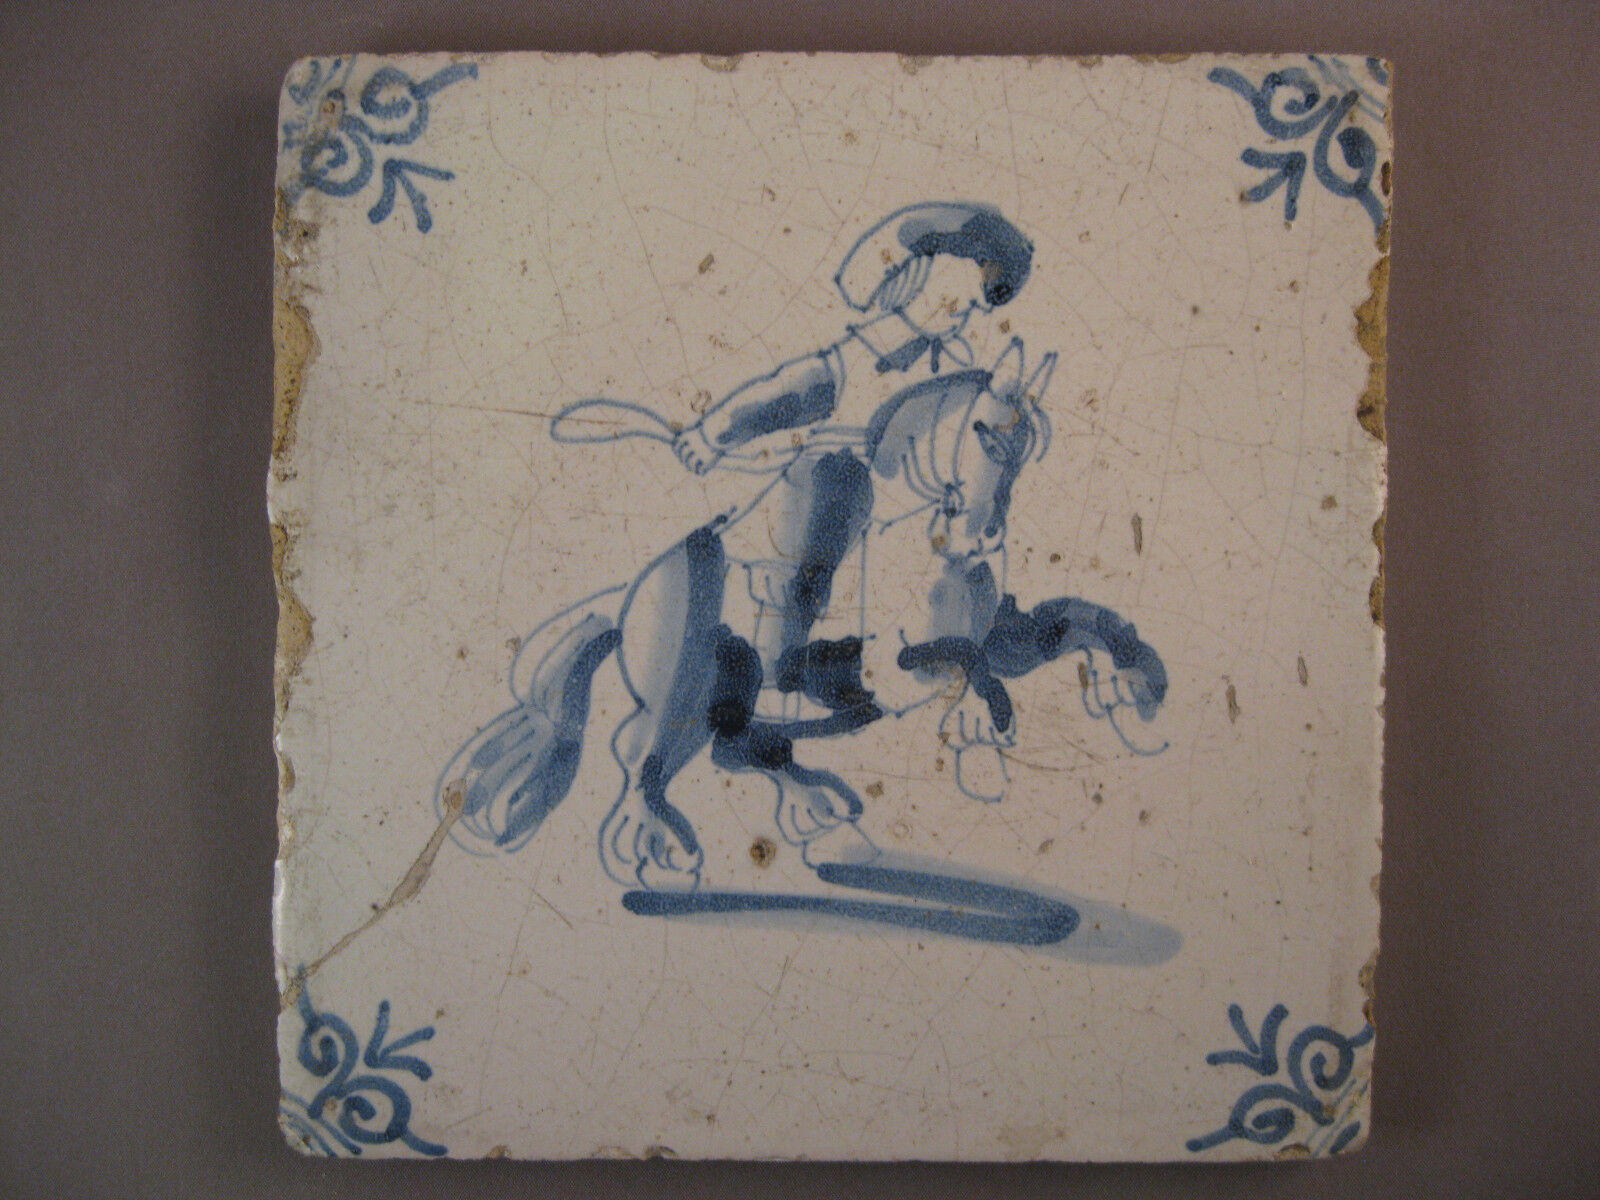  Antique Dutch animal tile Rider on horse rare tile 17th -- 